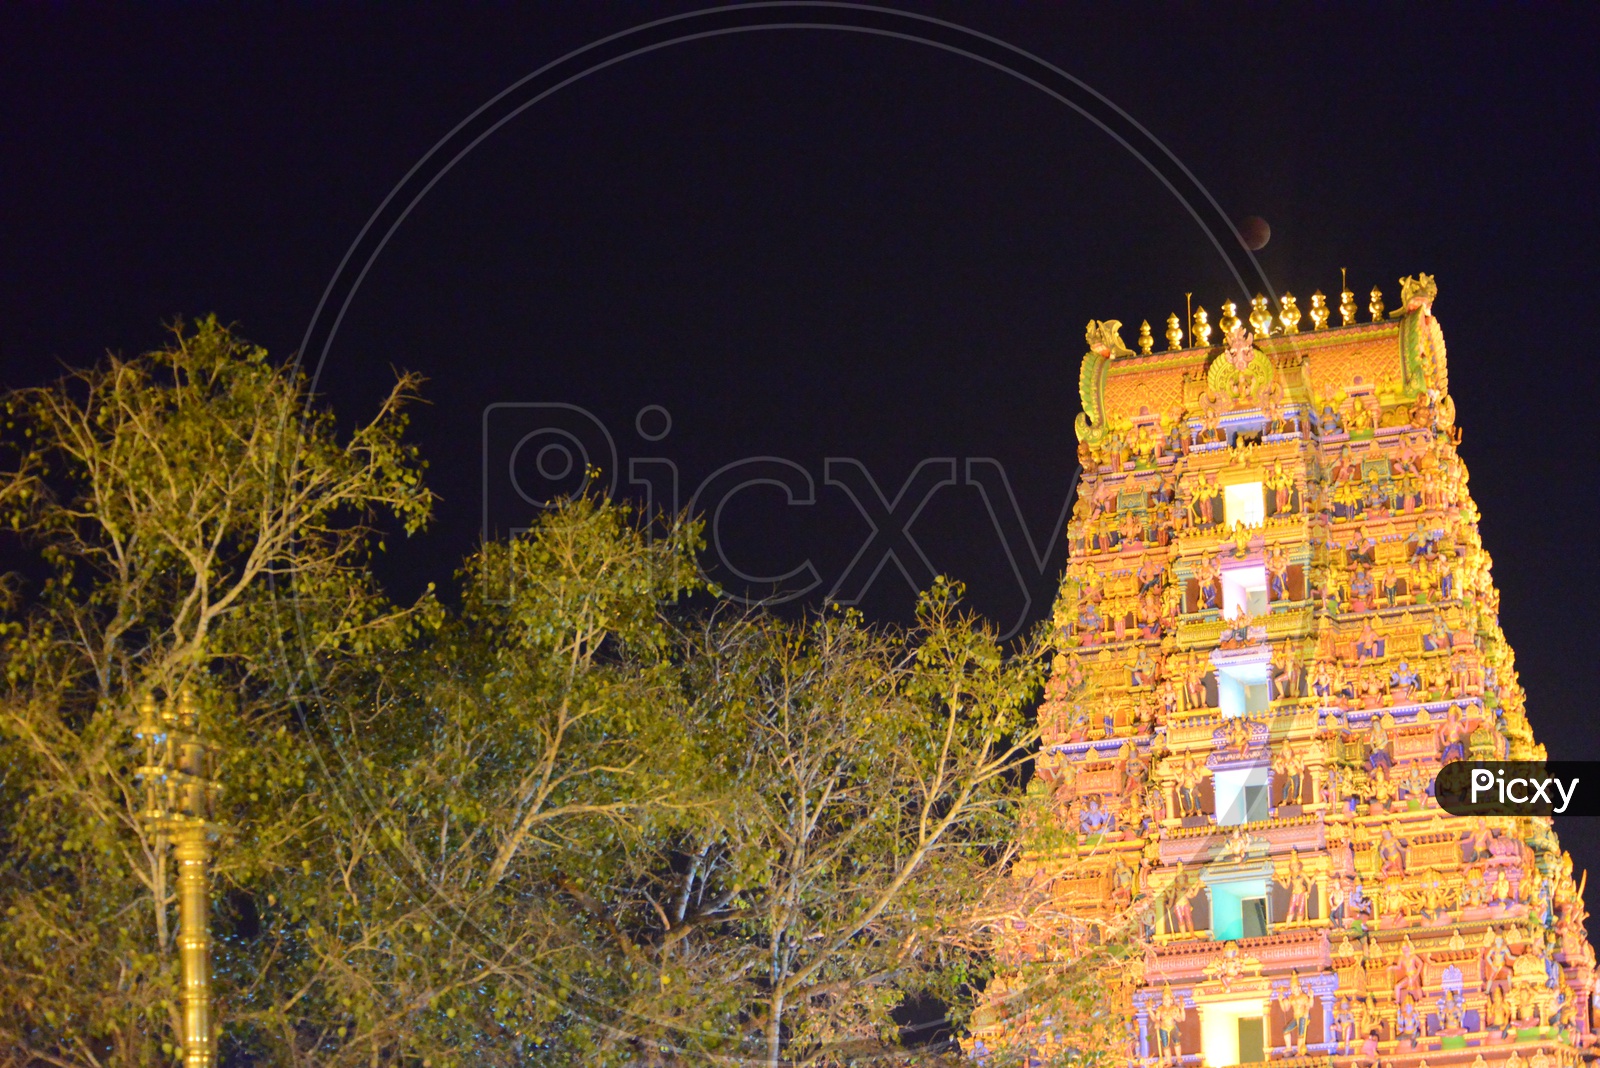 Moon  Lunar Eclipse  Over Hindu  Temple Shrine